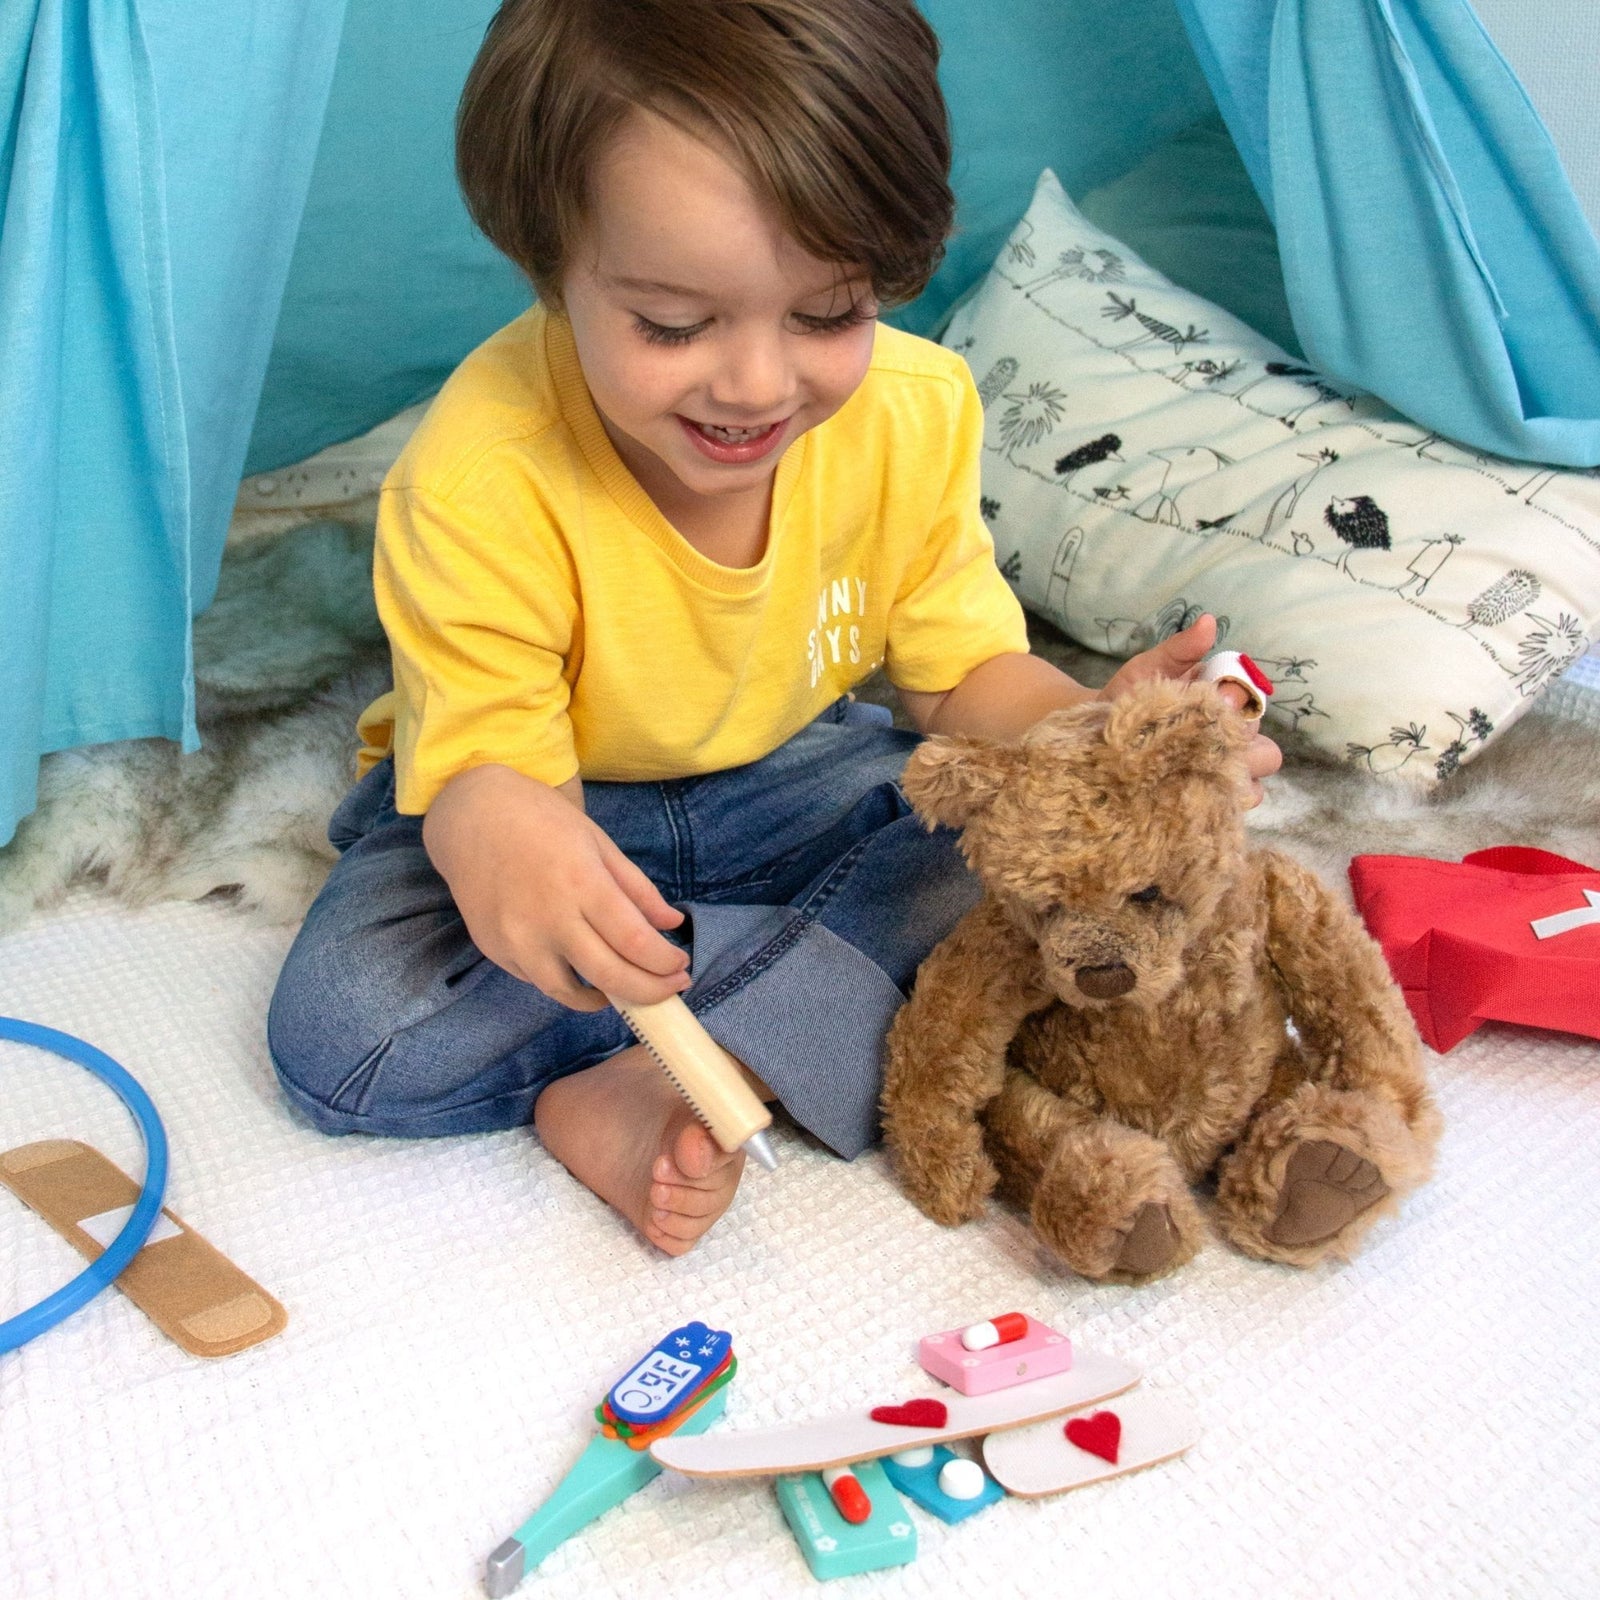 Montessori Wooden Doctor kit for Kids, Medical Play Set